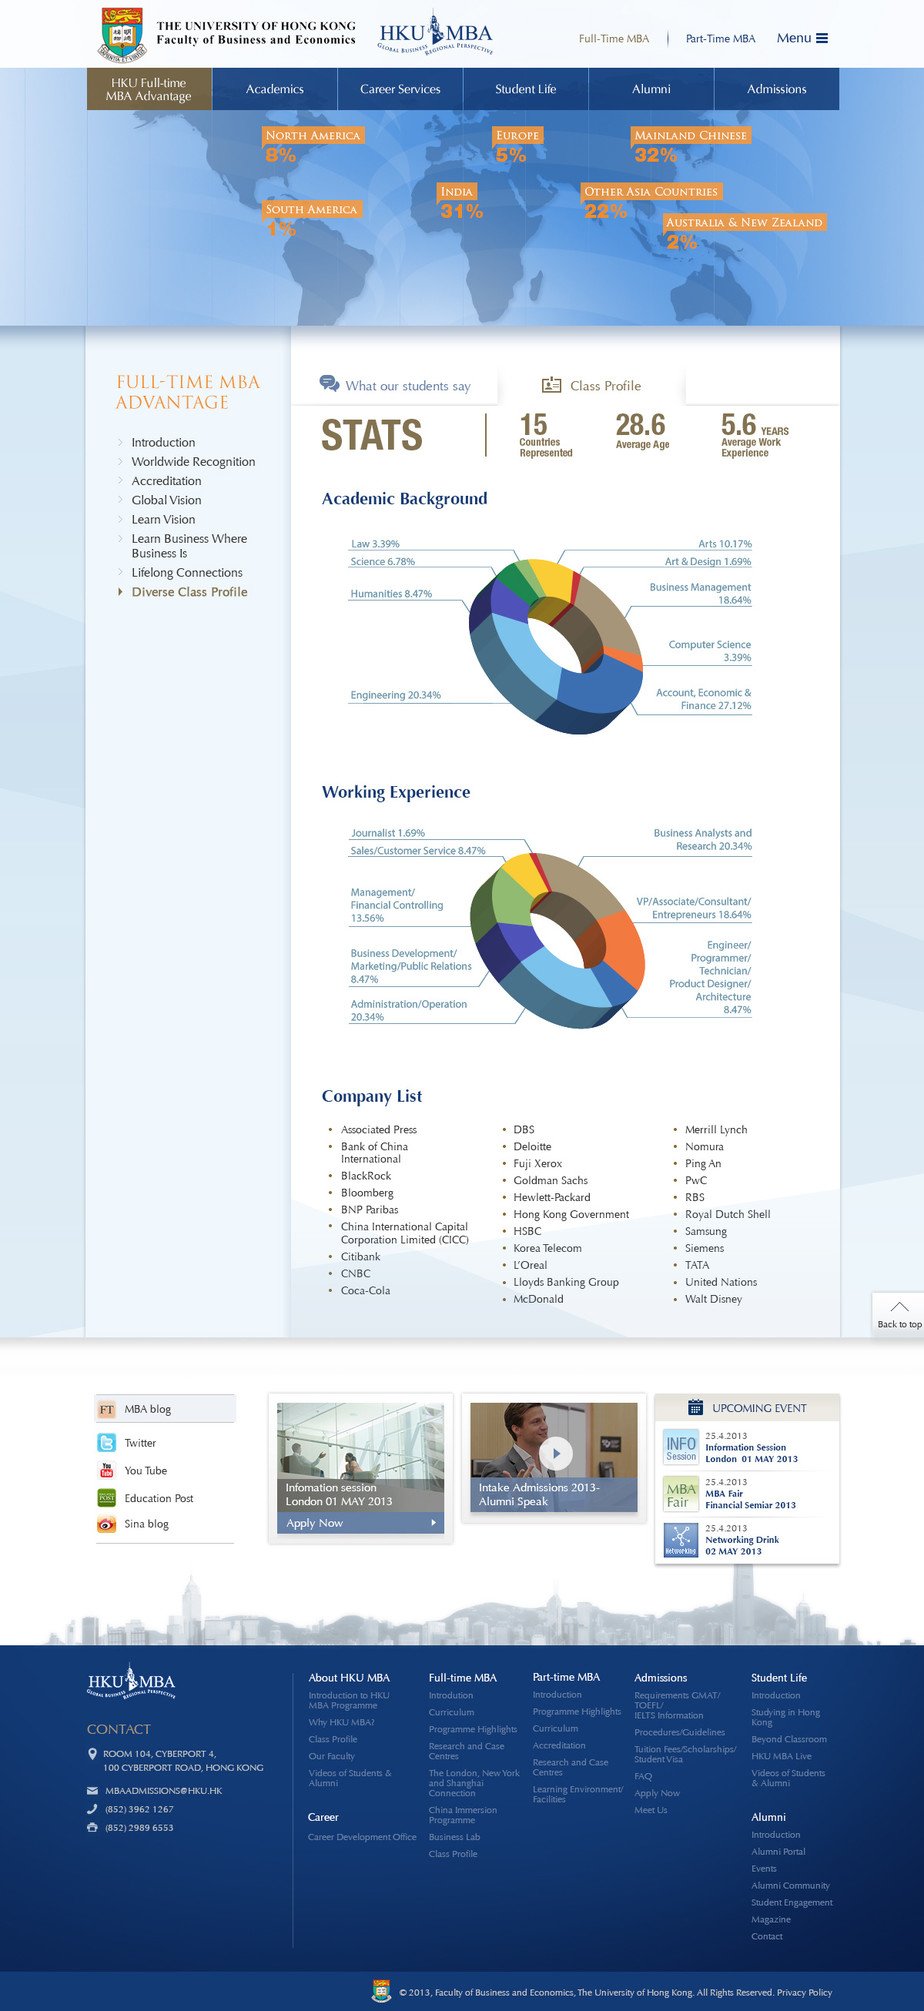 University of Hong Kong website screenshot for desktop version 3 of 8